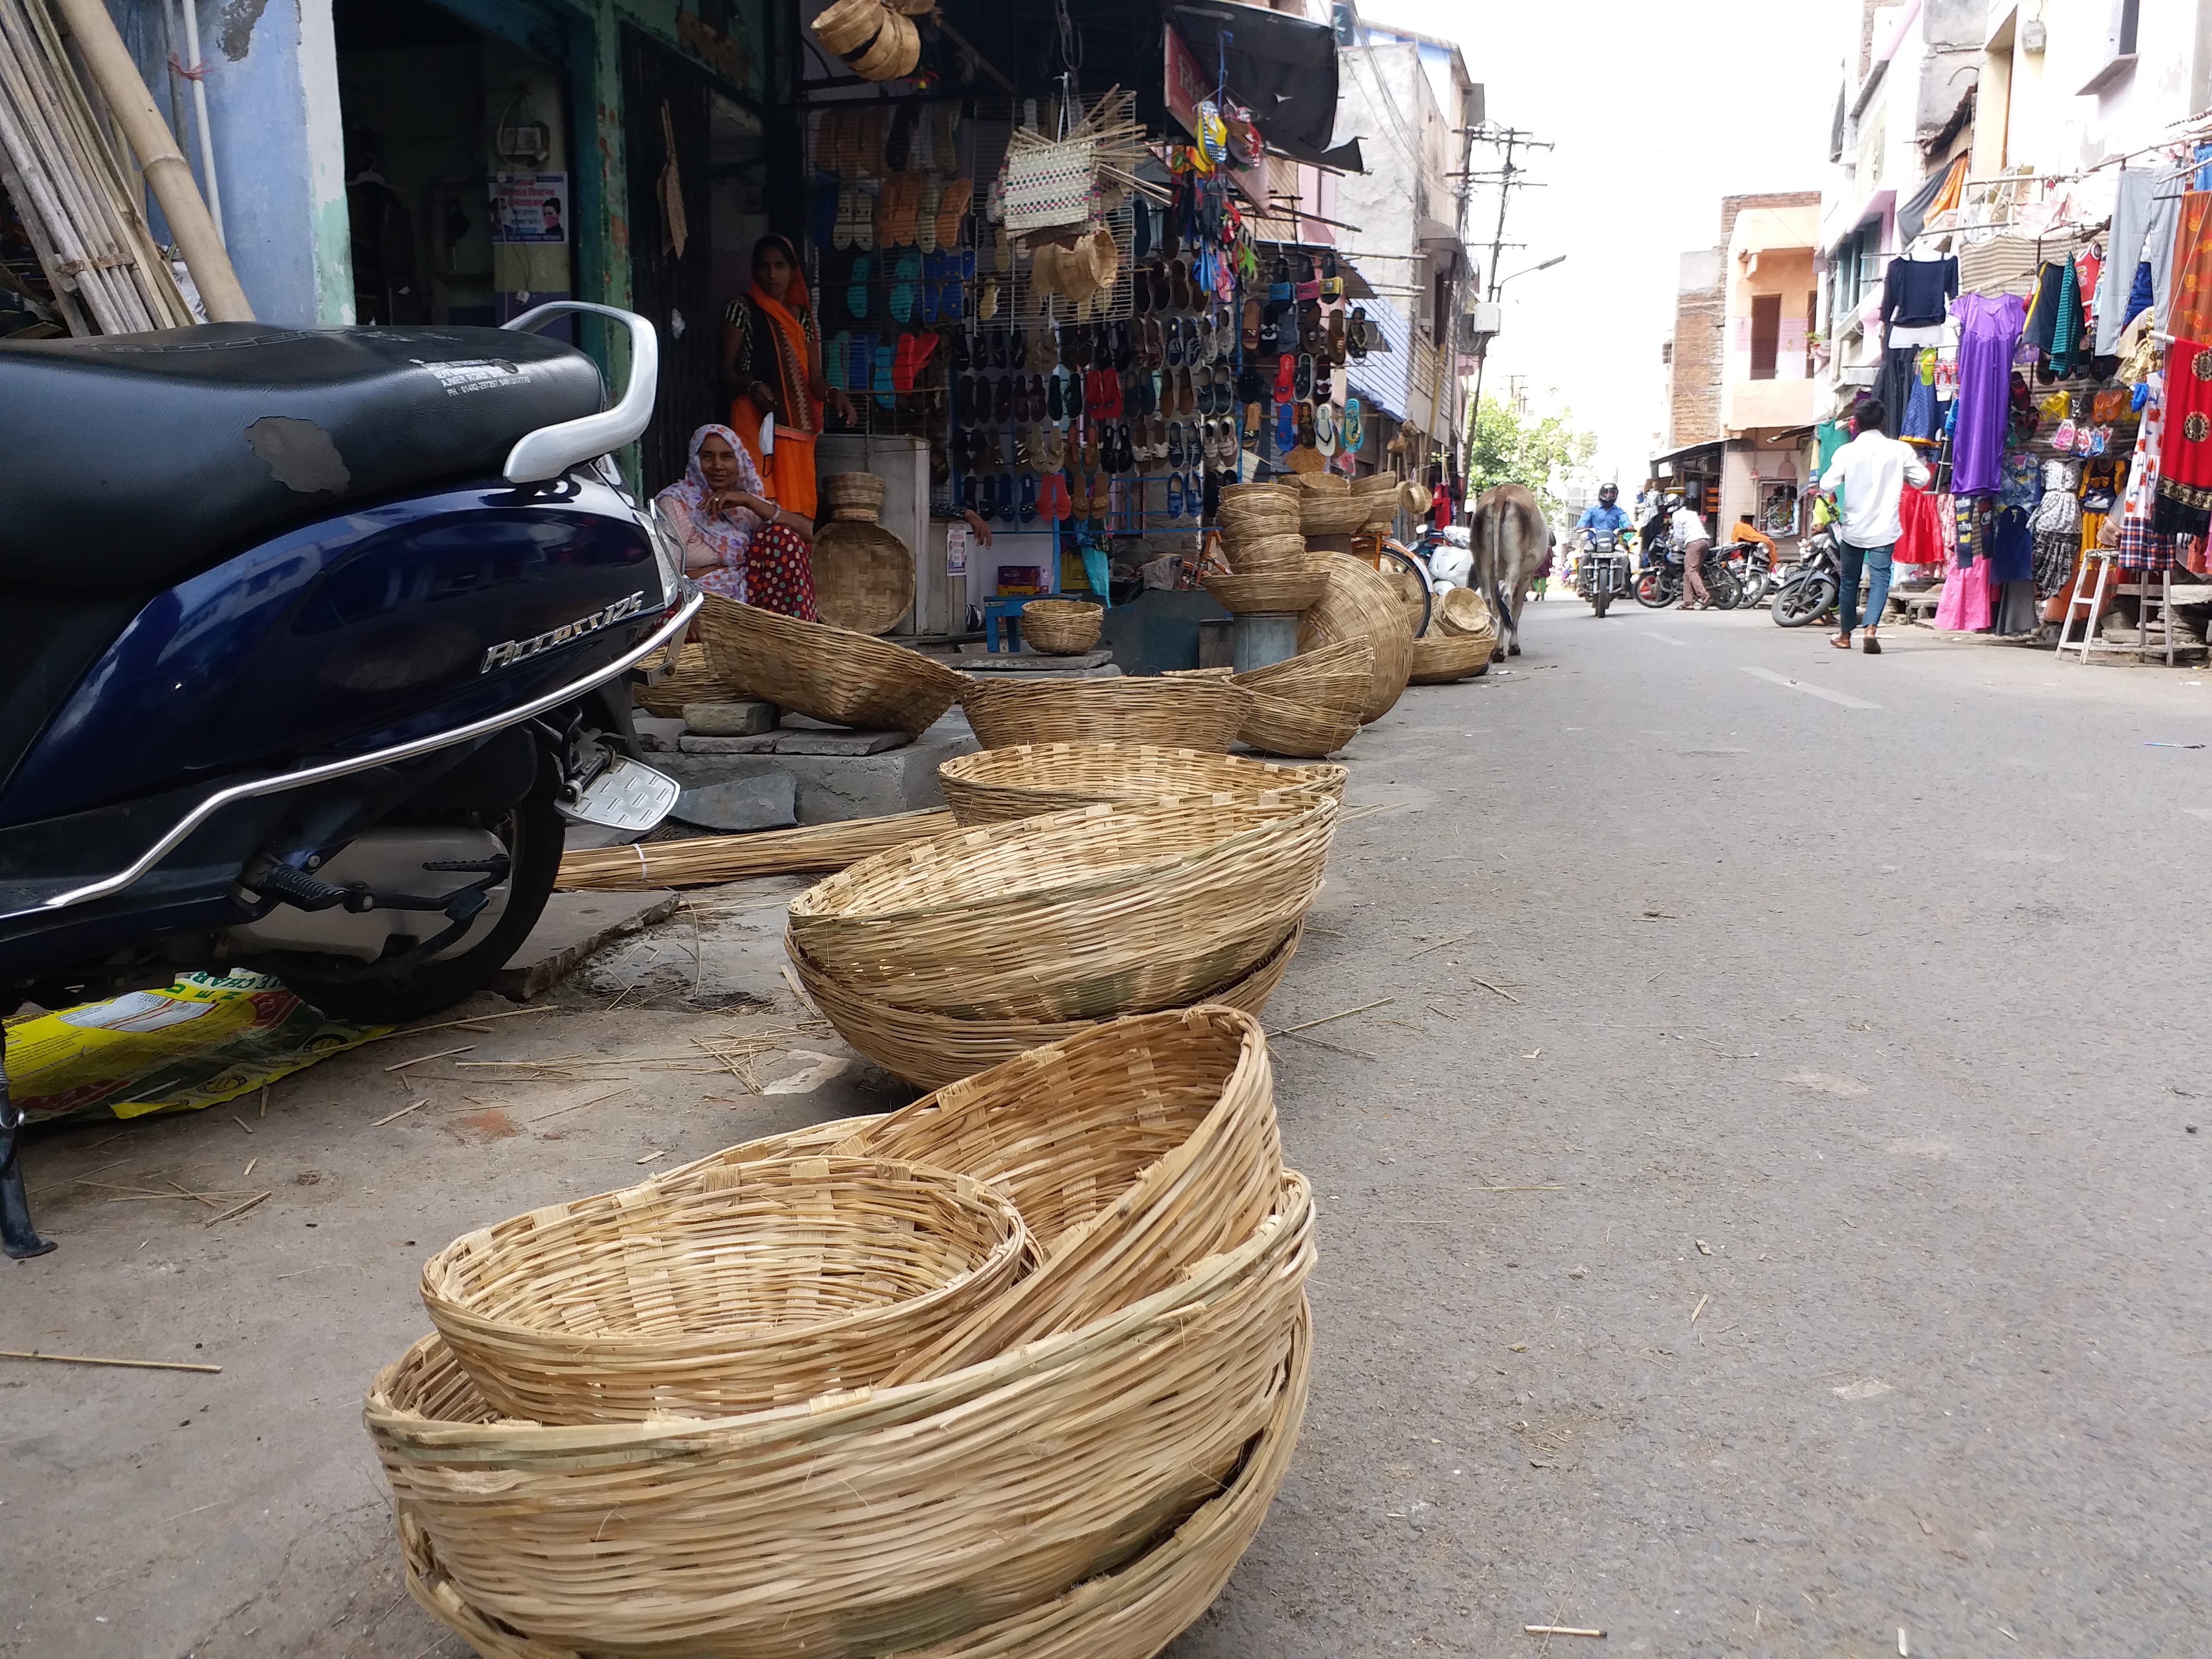 basket makers of bhilwara, भीलवाड़ा न्यूज